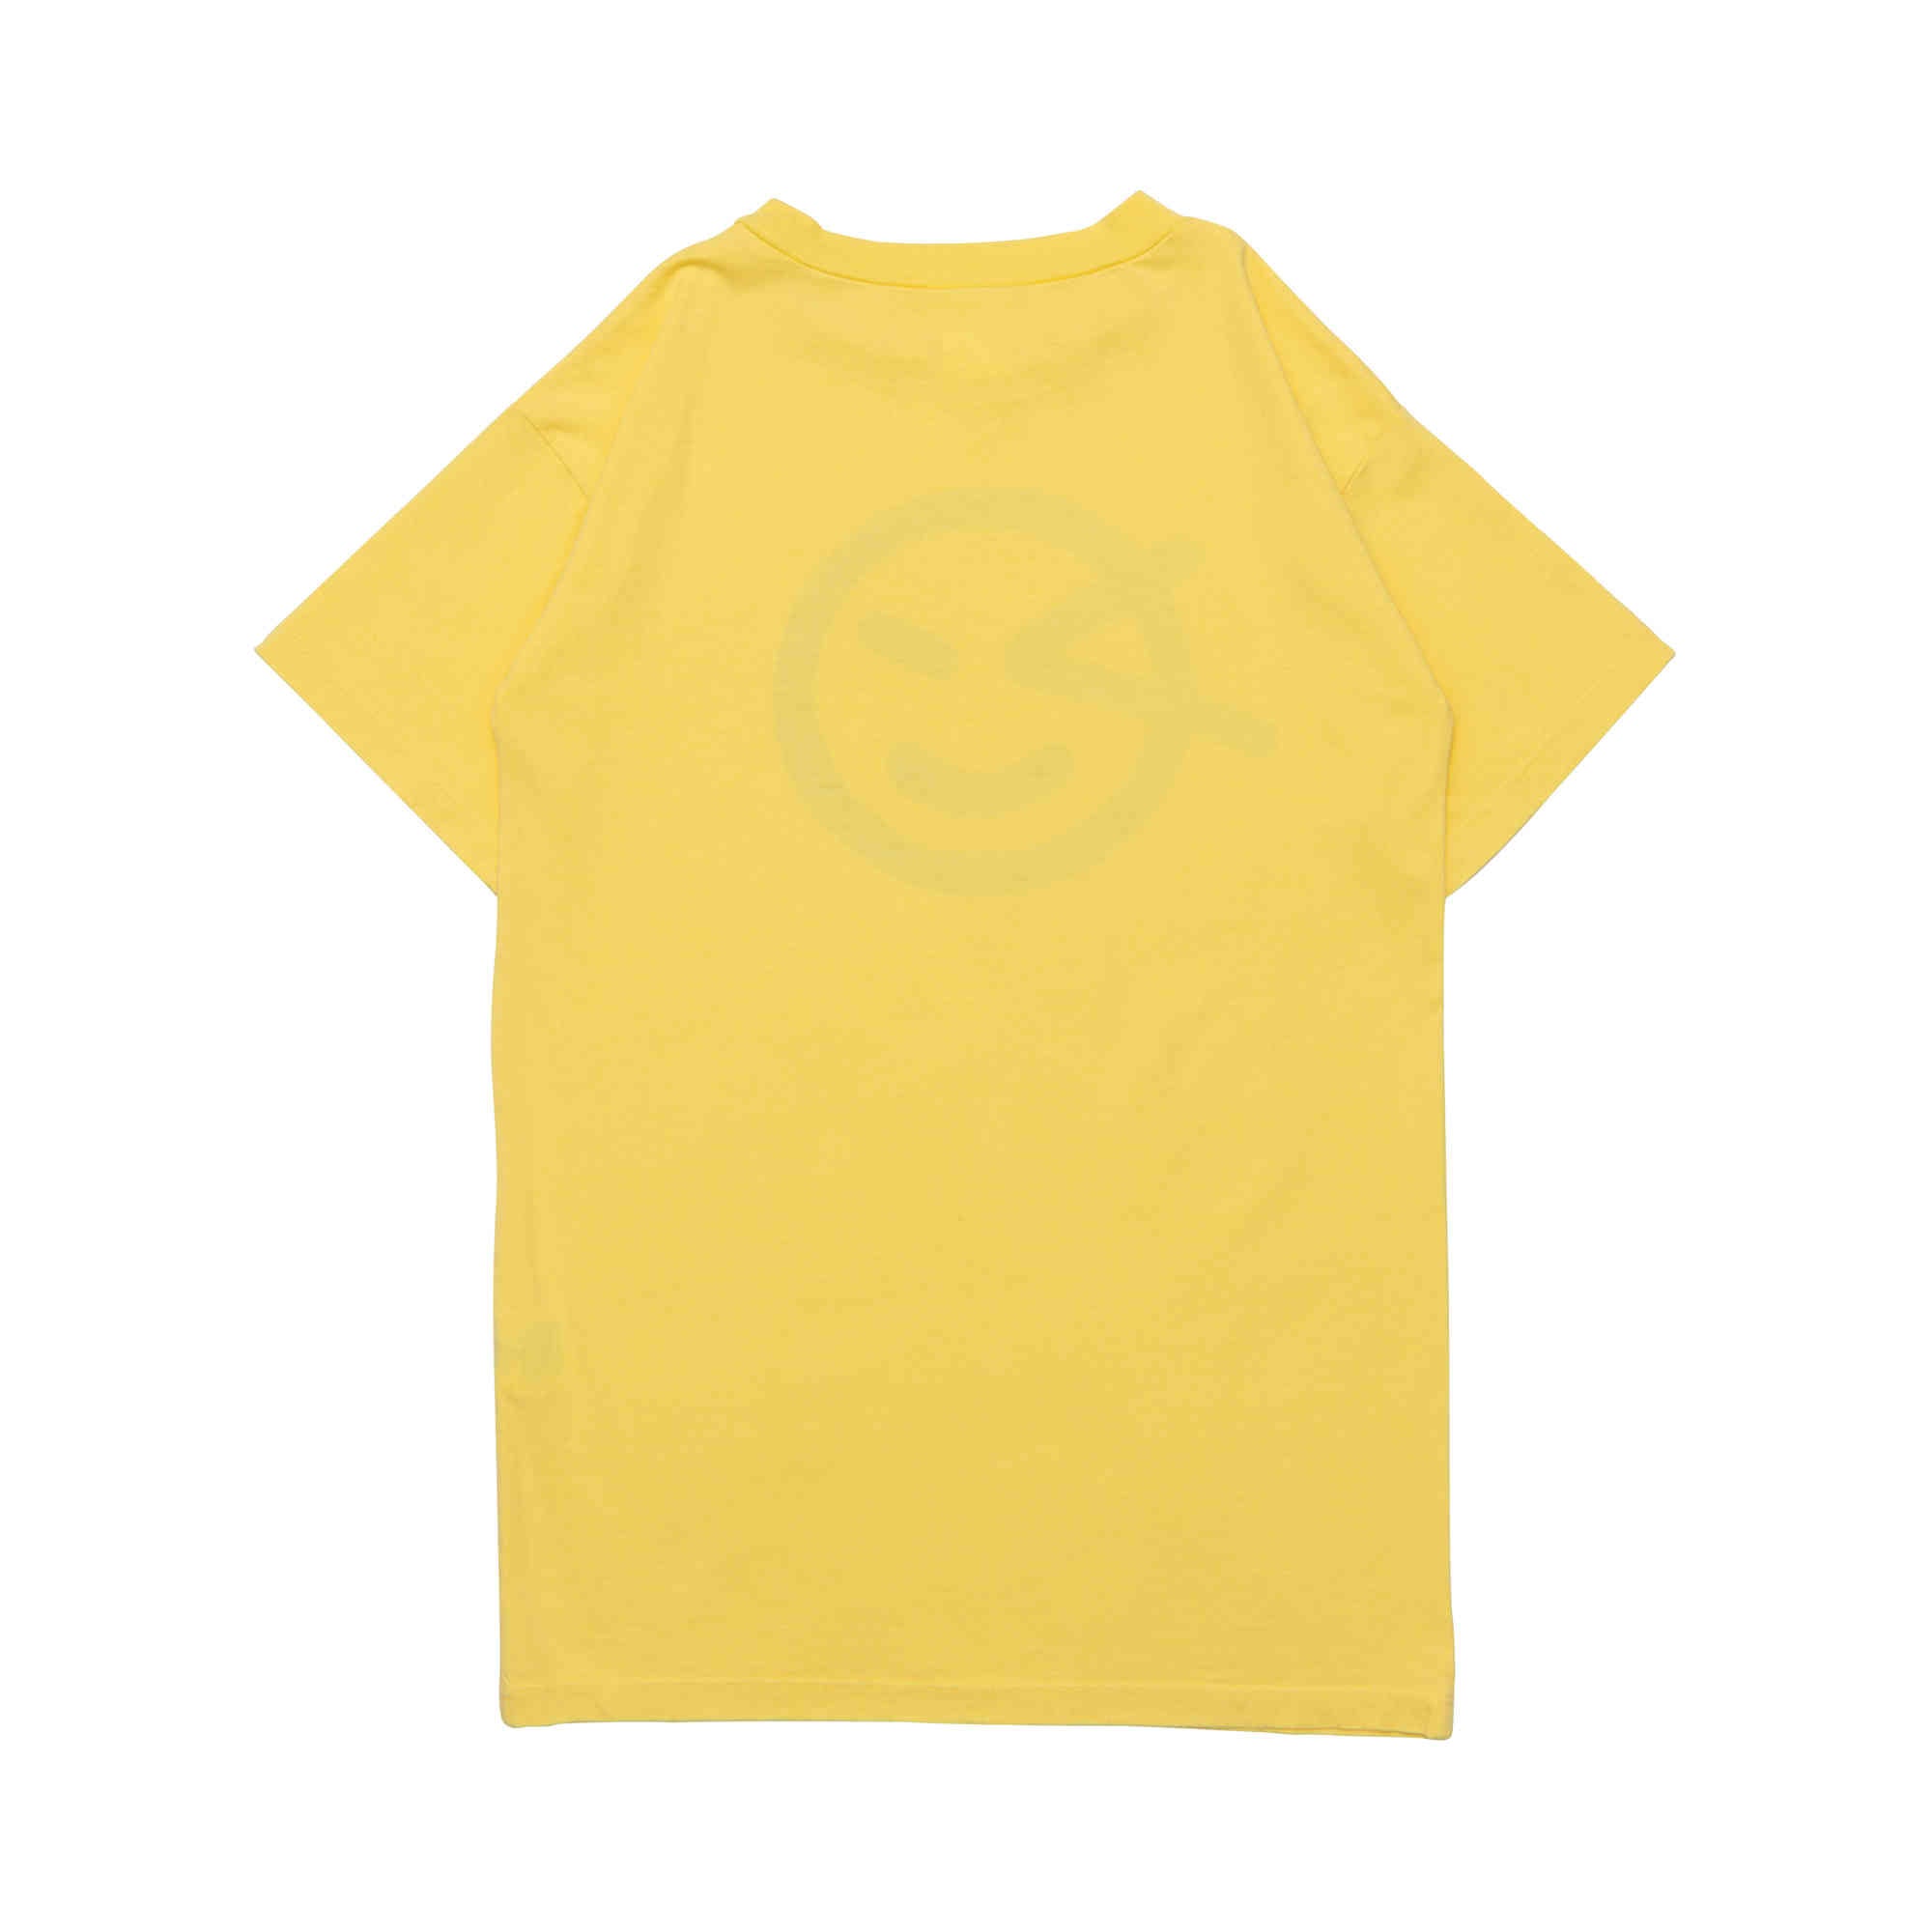 Girls Yellow T-shirt Dress